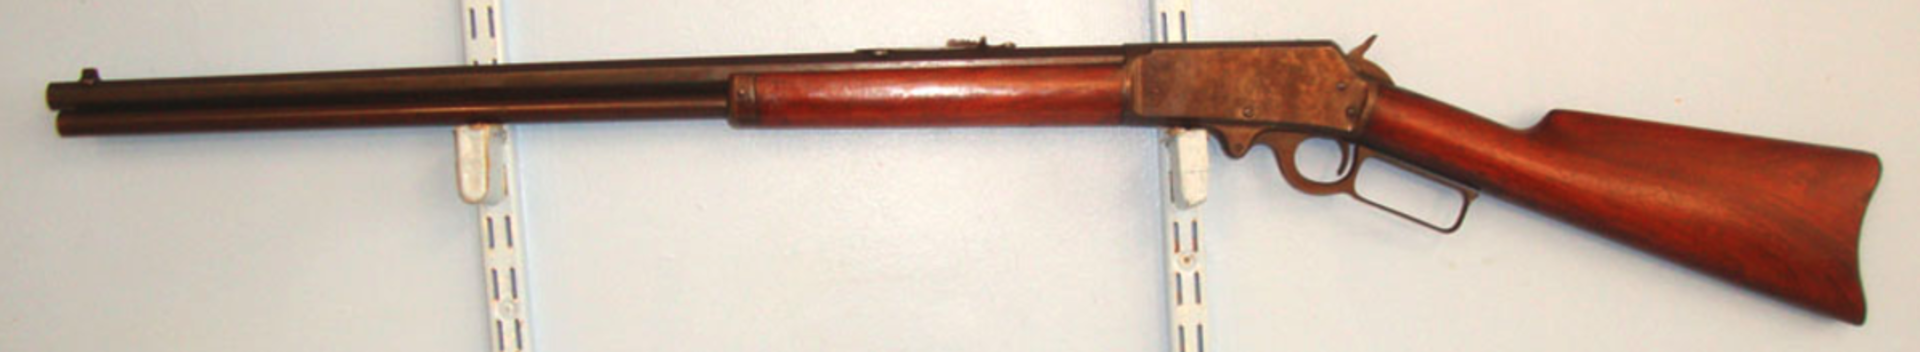 Marlin Safety Model 1893 .32-40 Obsolete Calibre Lever Action Rifle Magazine & Octagonal Barrel - Image 2 of 3